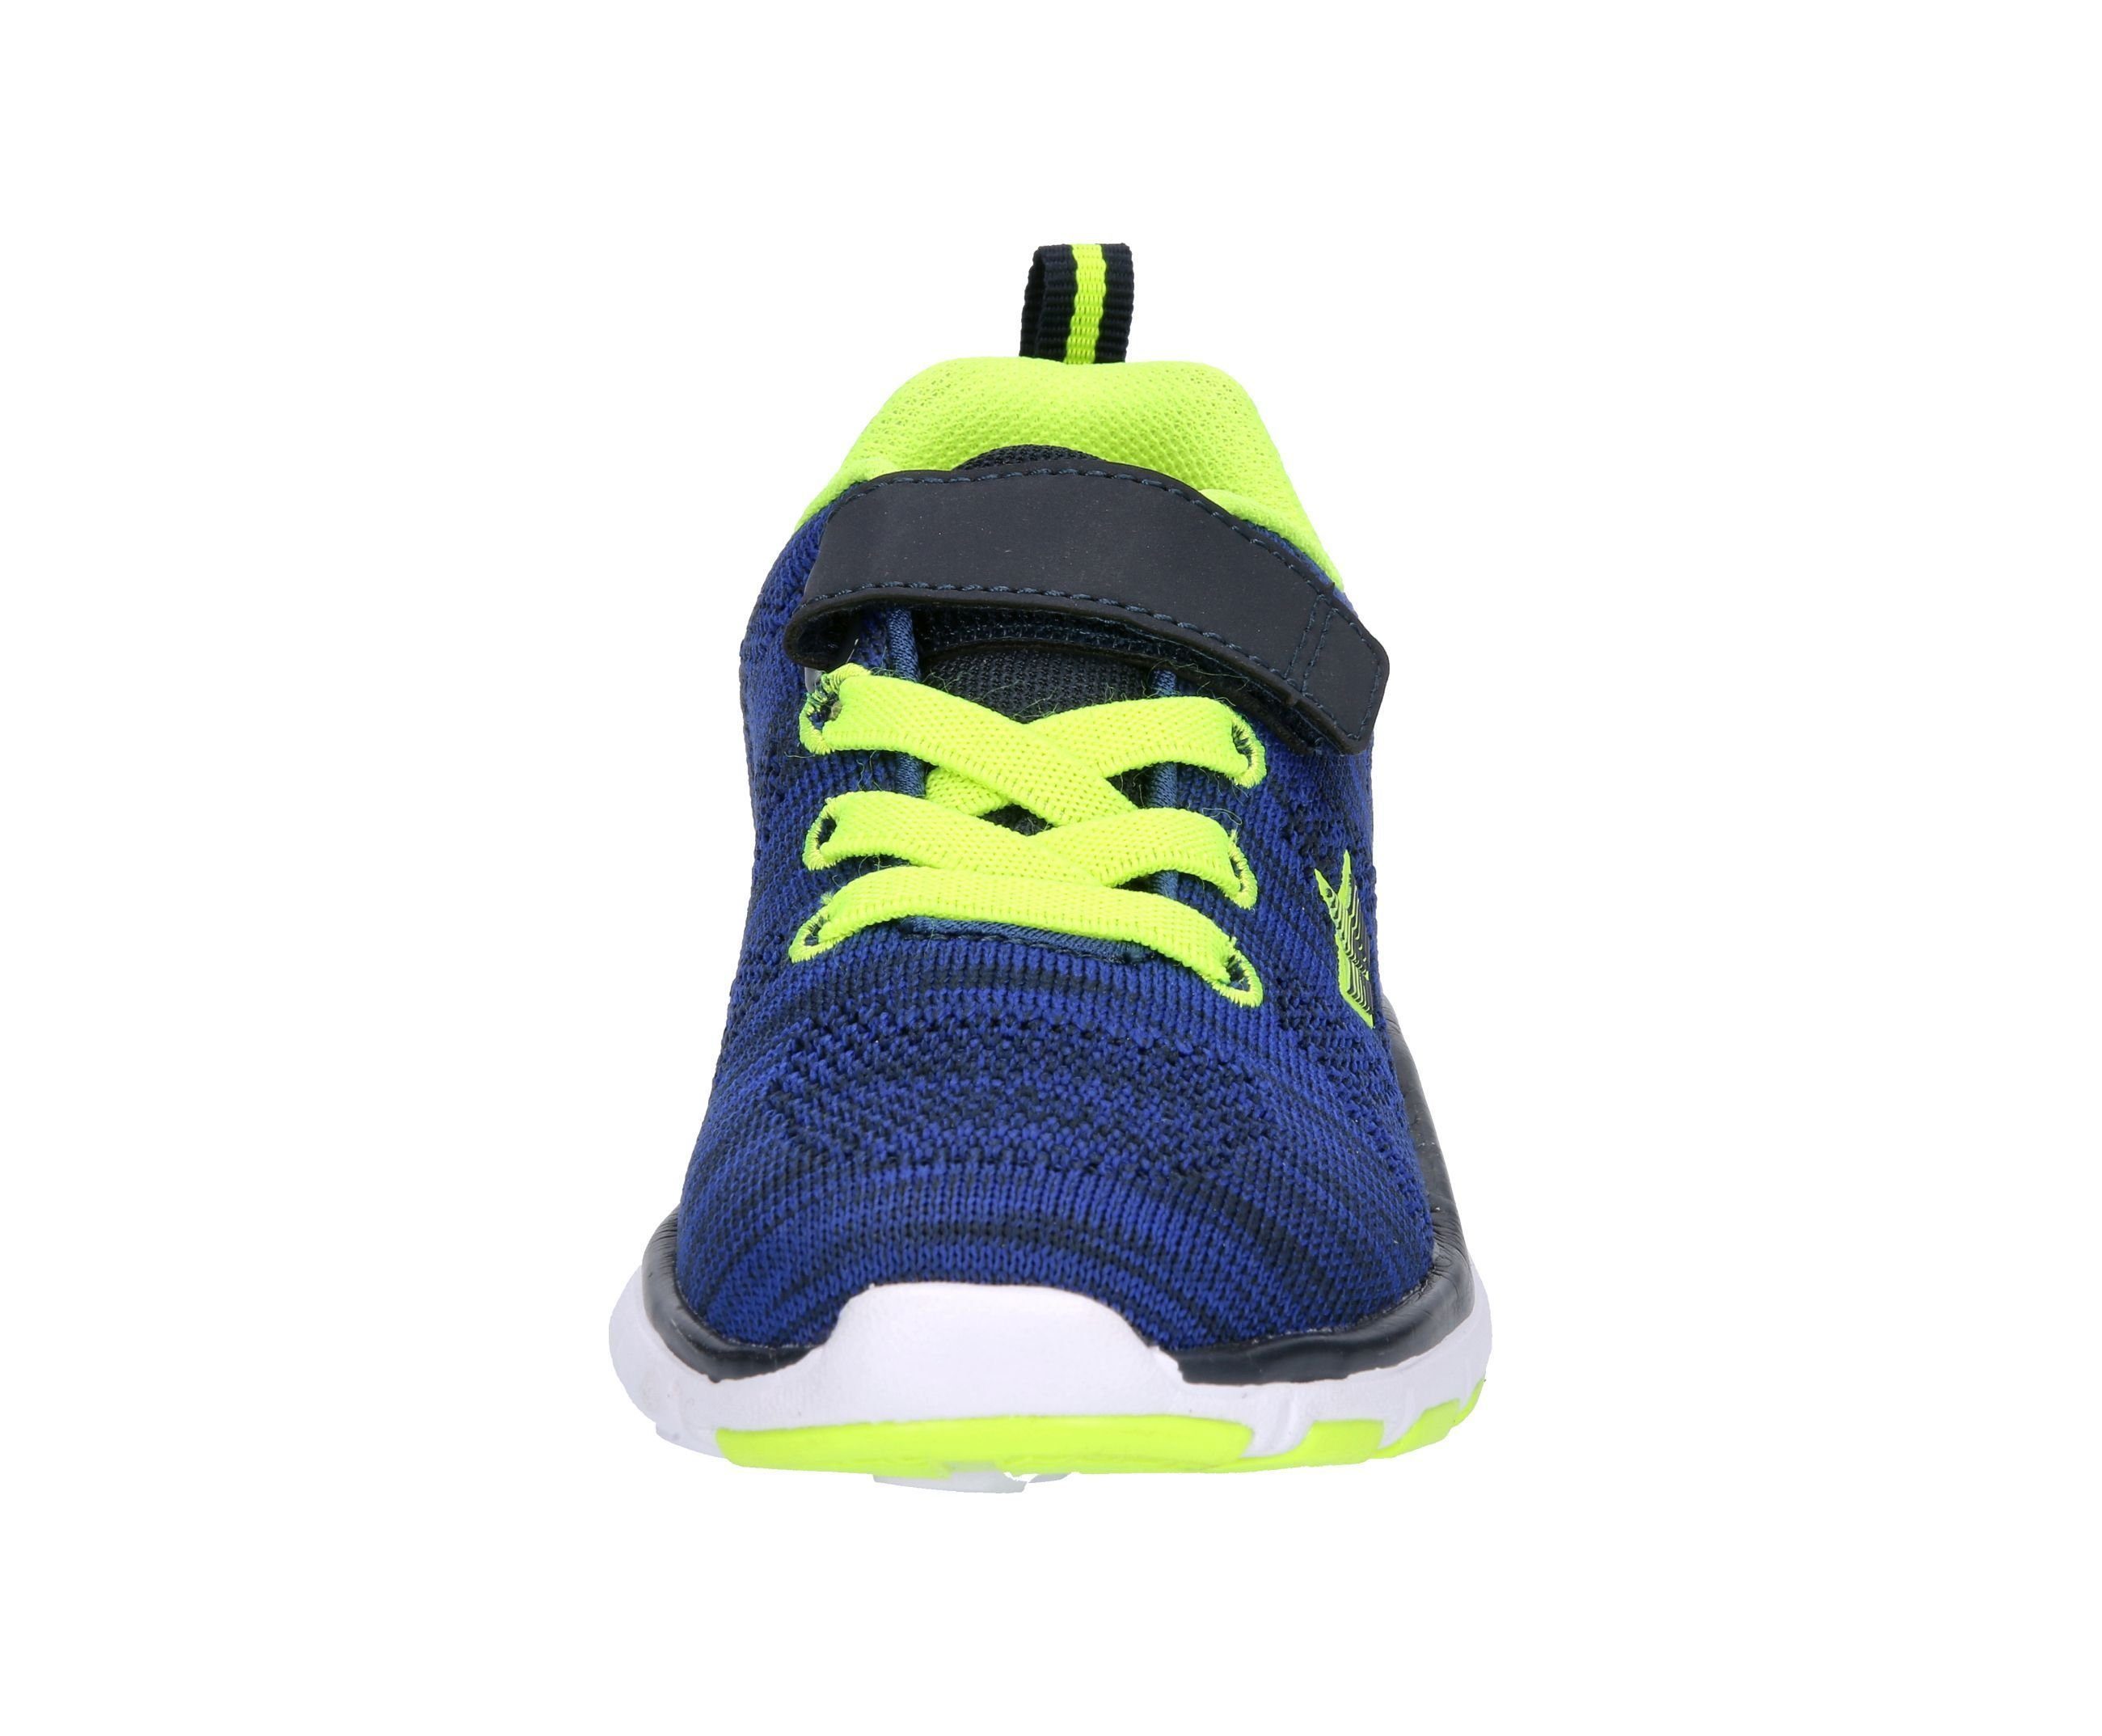 Lico Freizeitschuh Colour blau/marine/lemon VS Sneaker